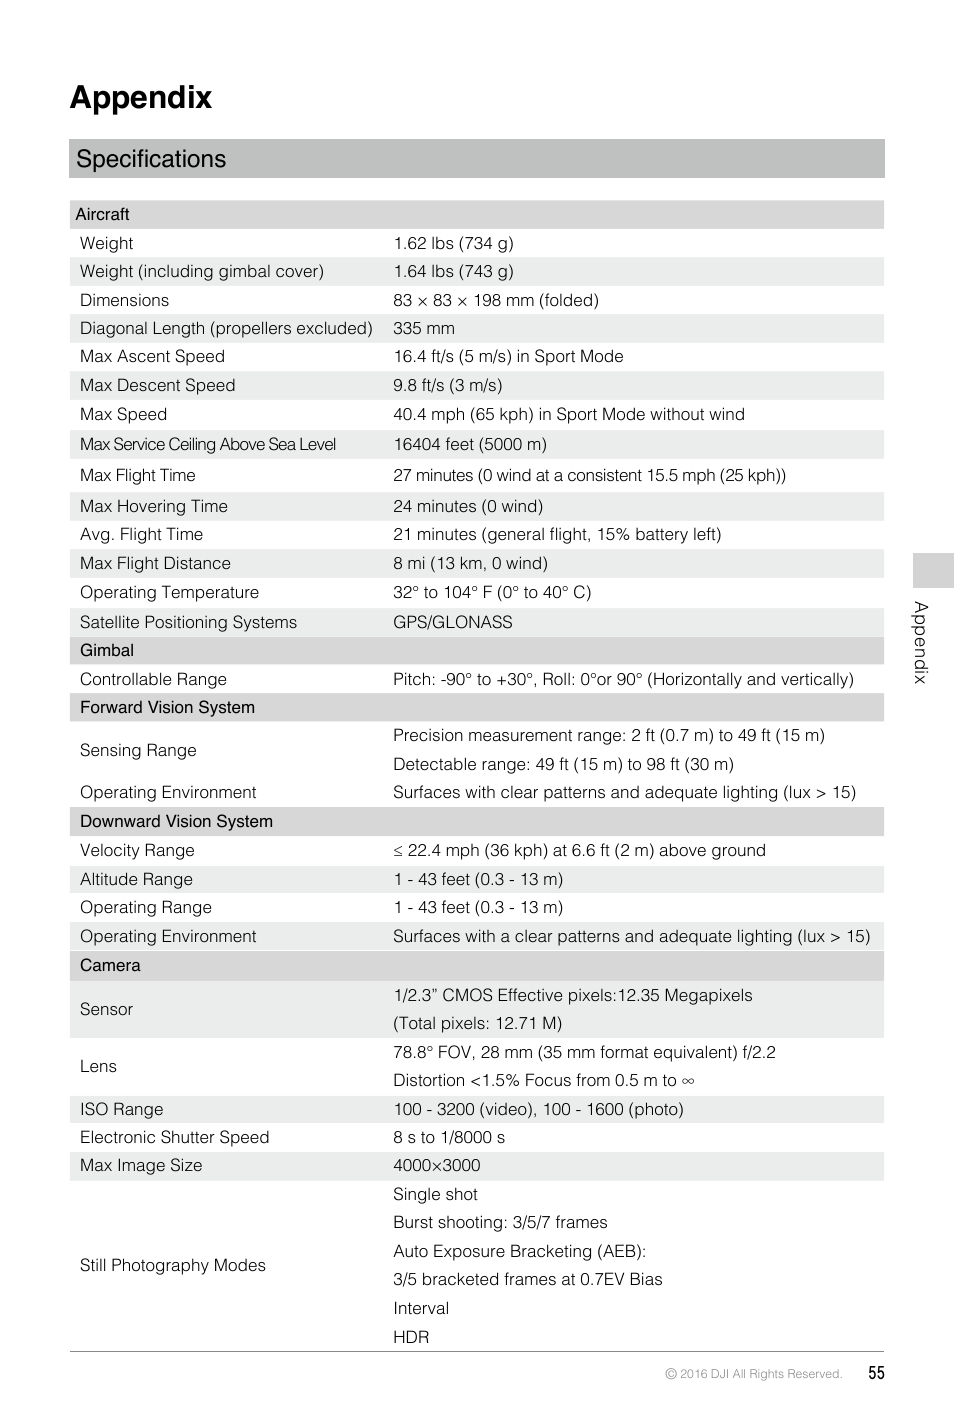 Appendix, Specifications | DJI Mavic Pro User Manual | Page 55 / 60